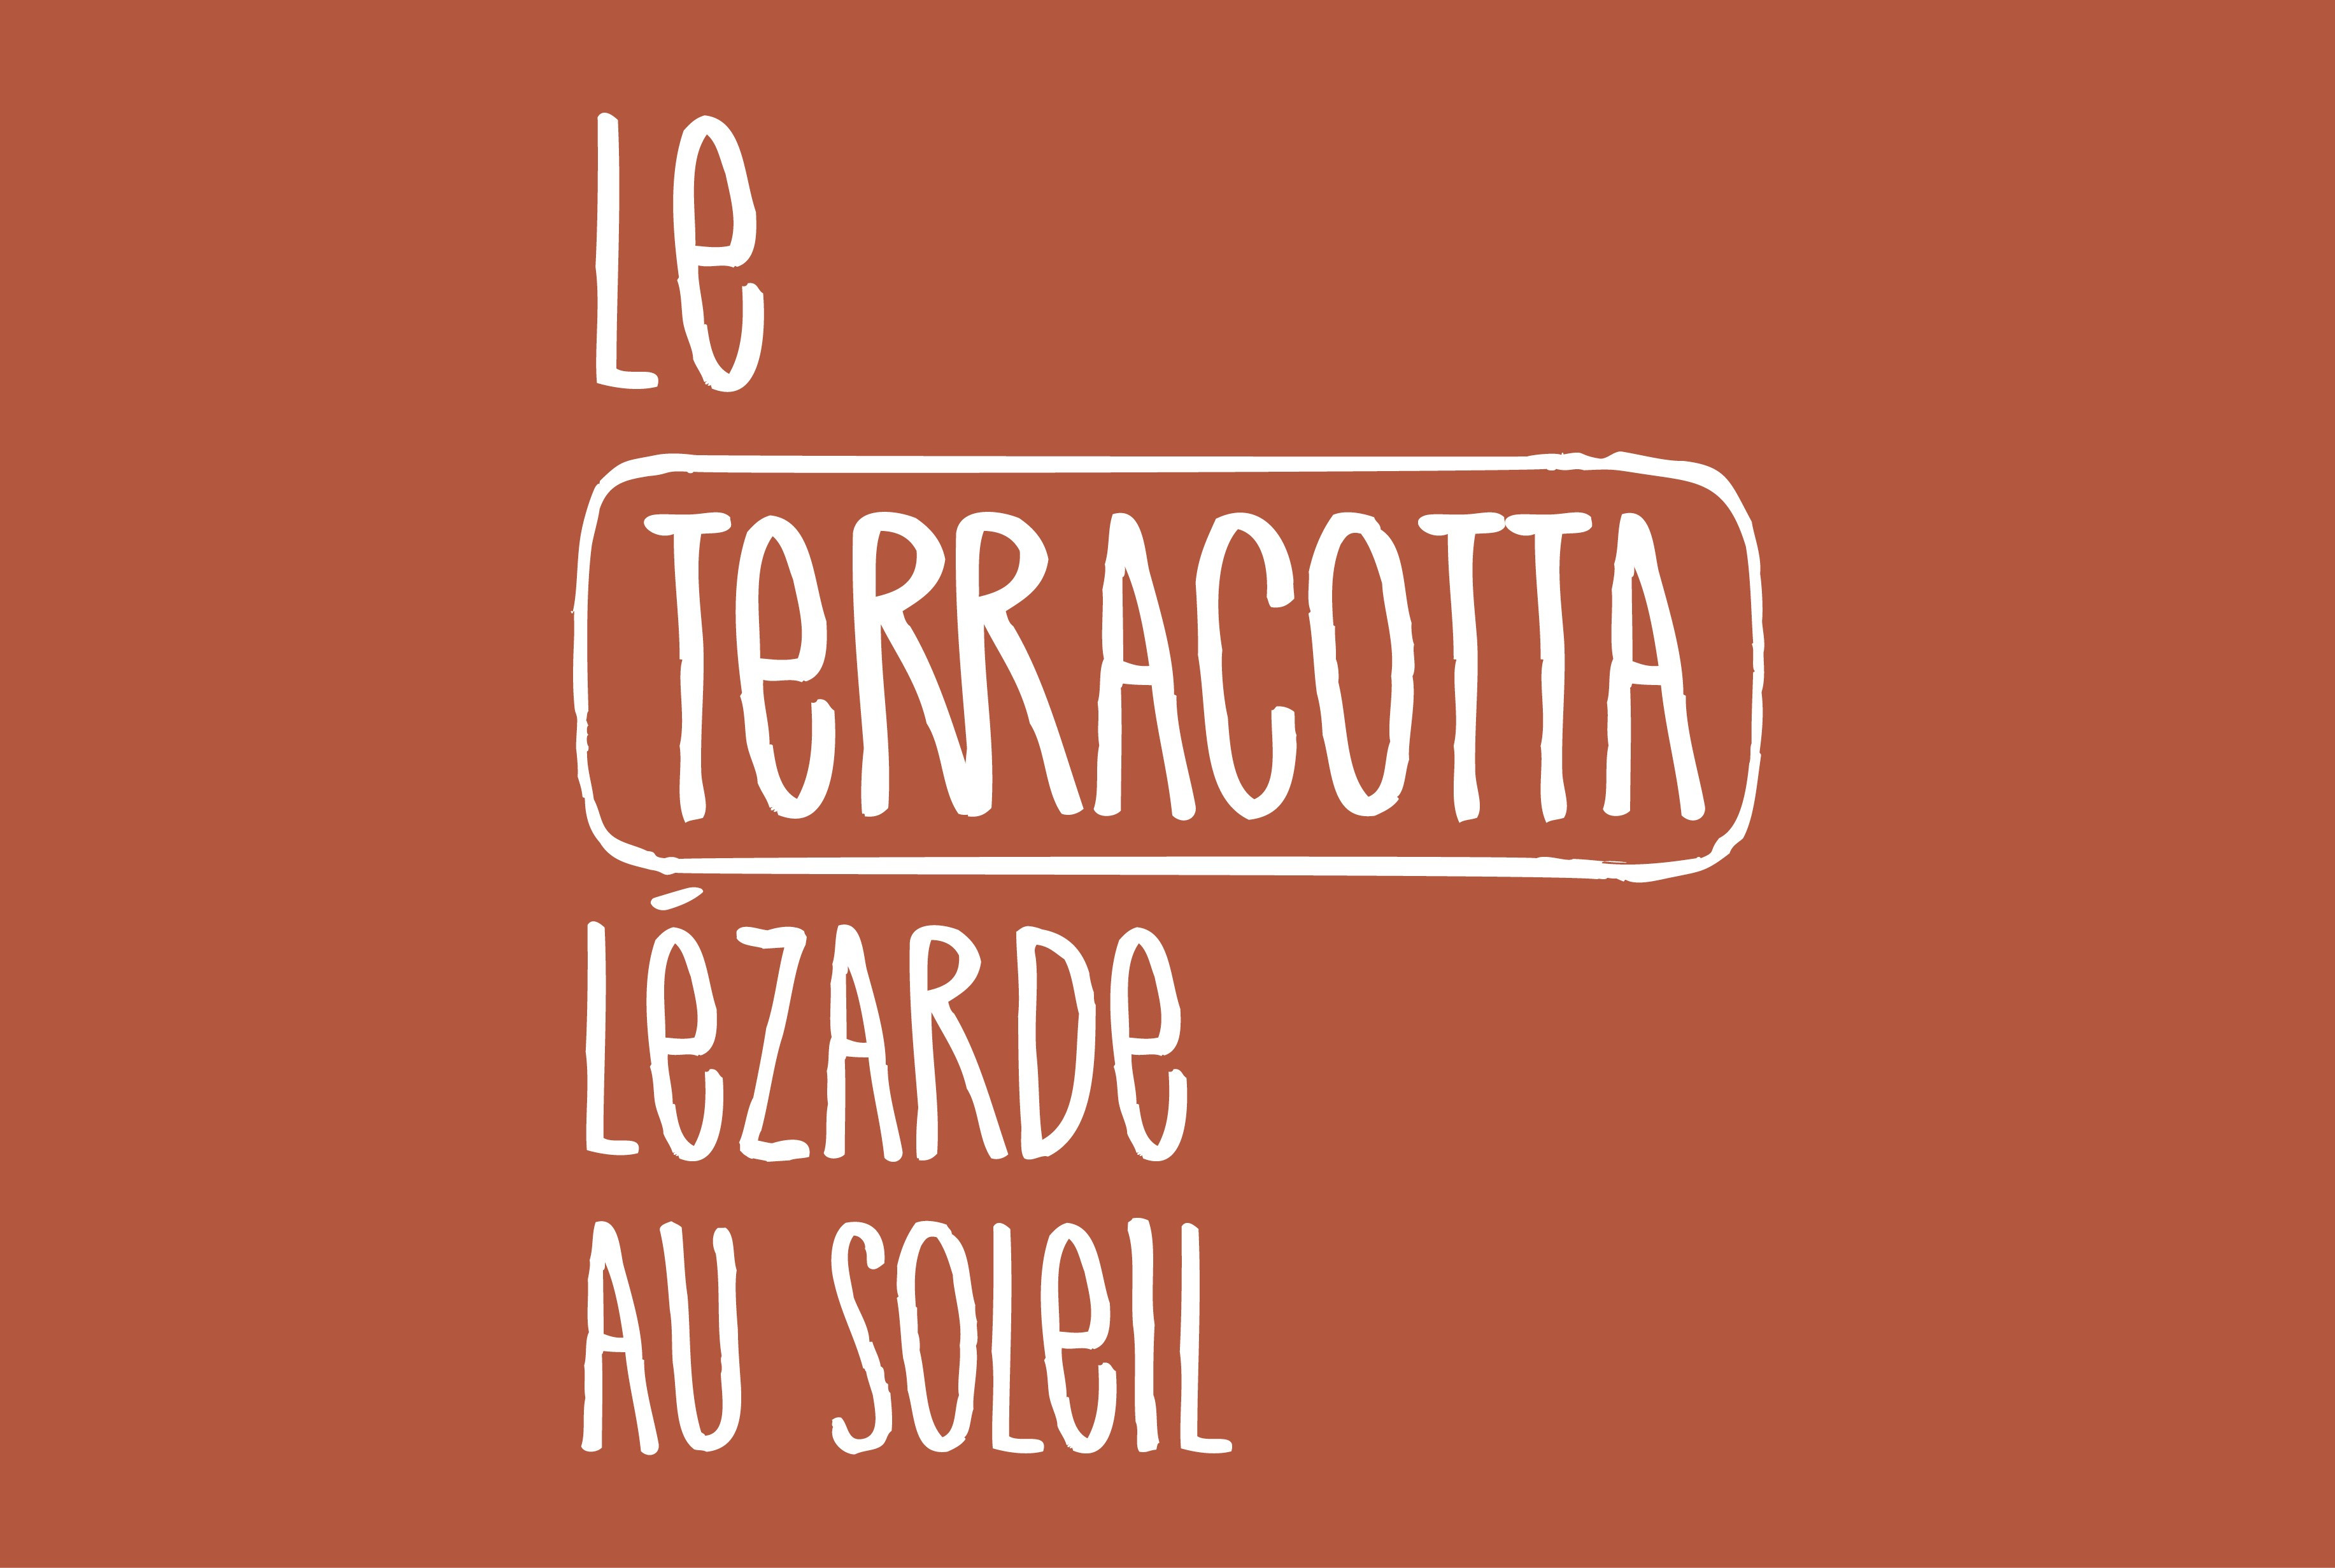 Relook Tout finition - Aspect satin - Terracotta